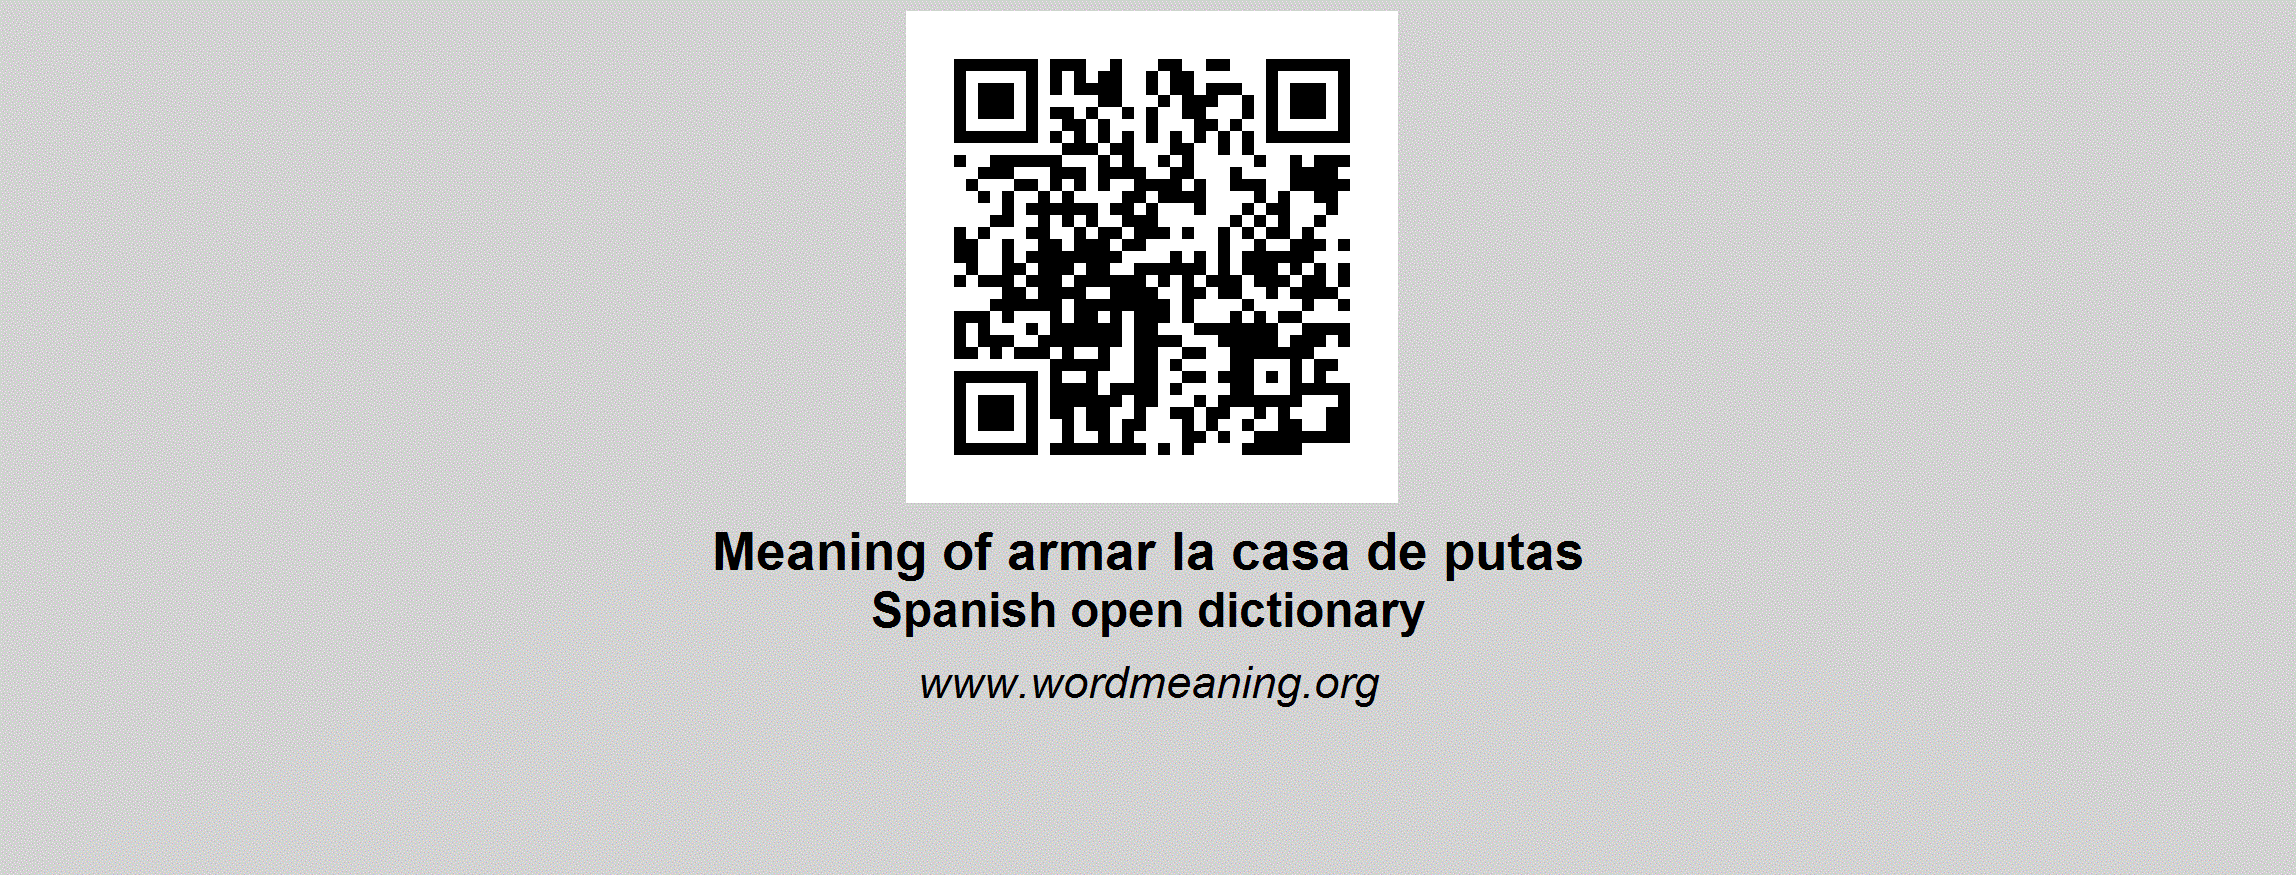 Armar Logo - ARMAR LA CASA DE PUTAS open dictionary